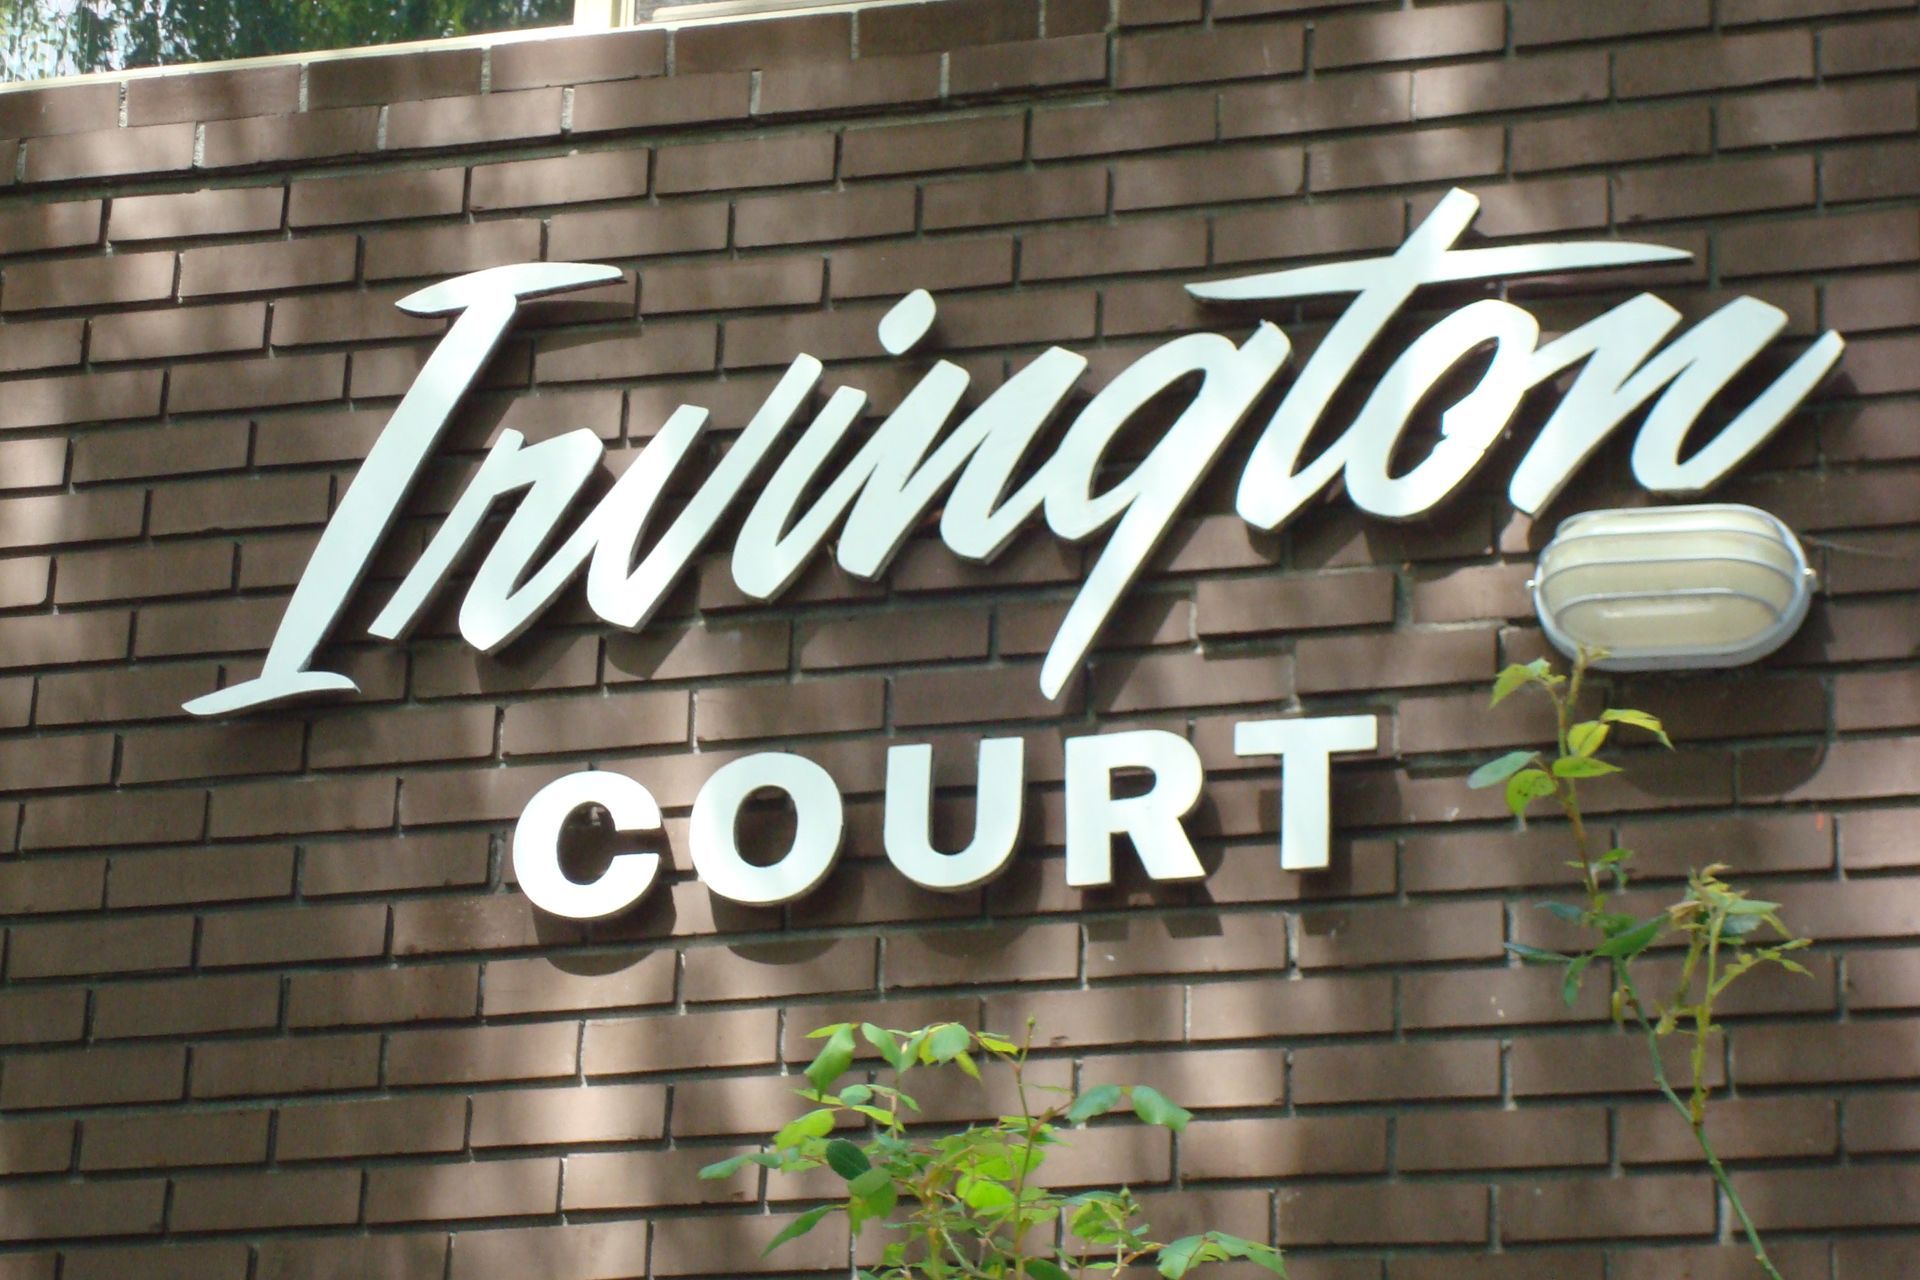 Irvington Court sign